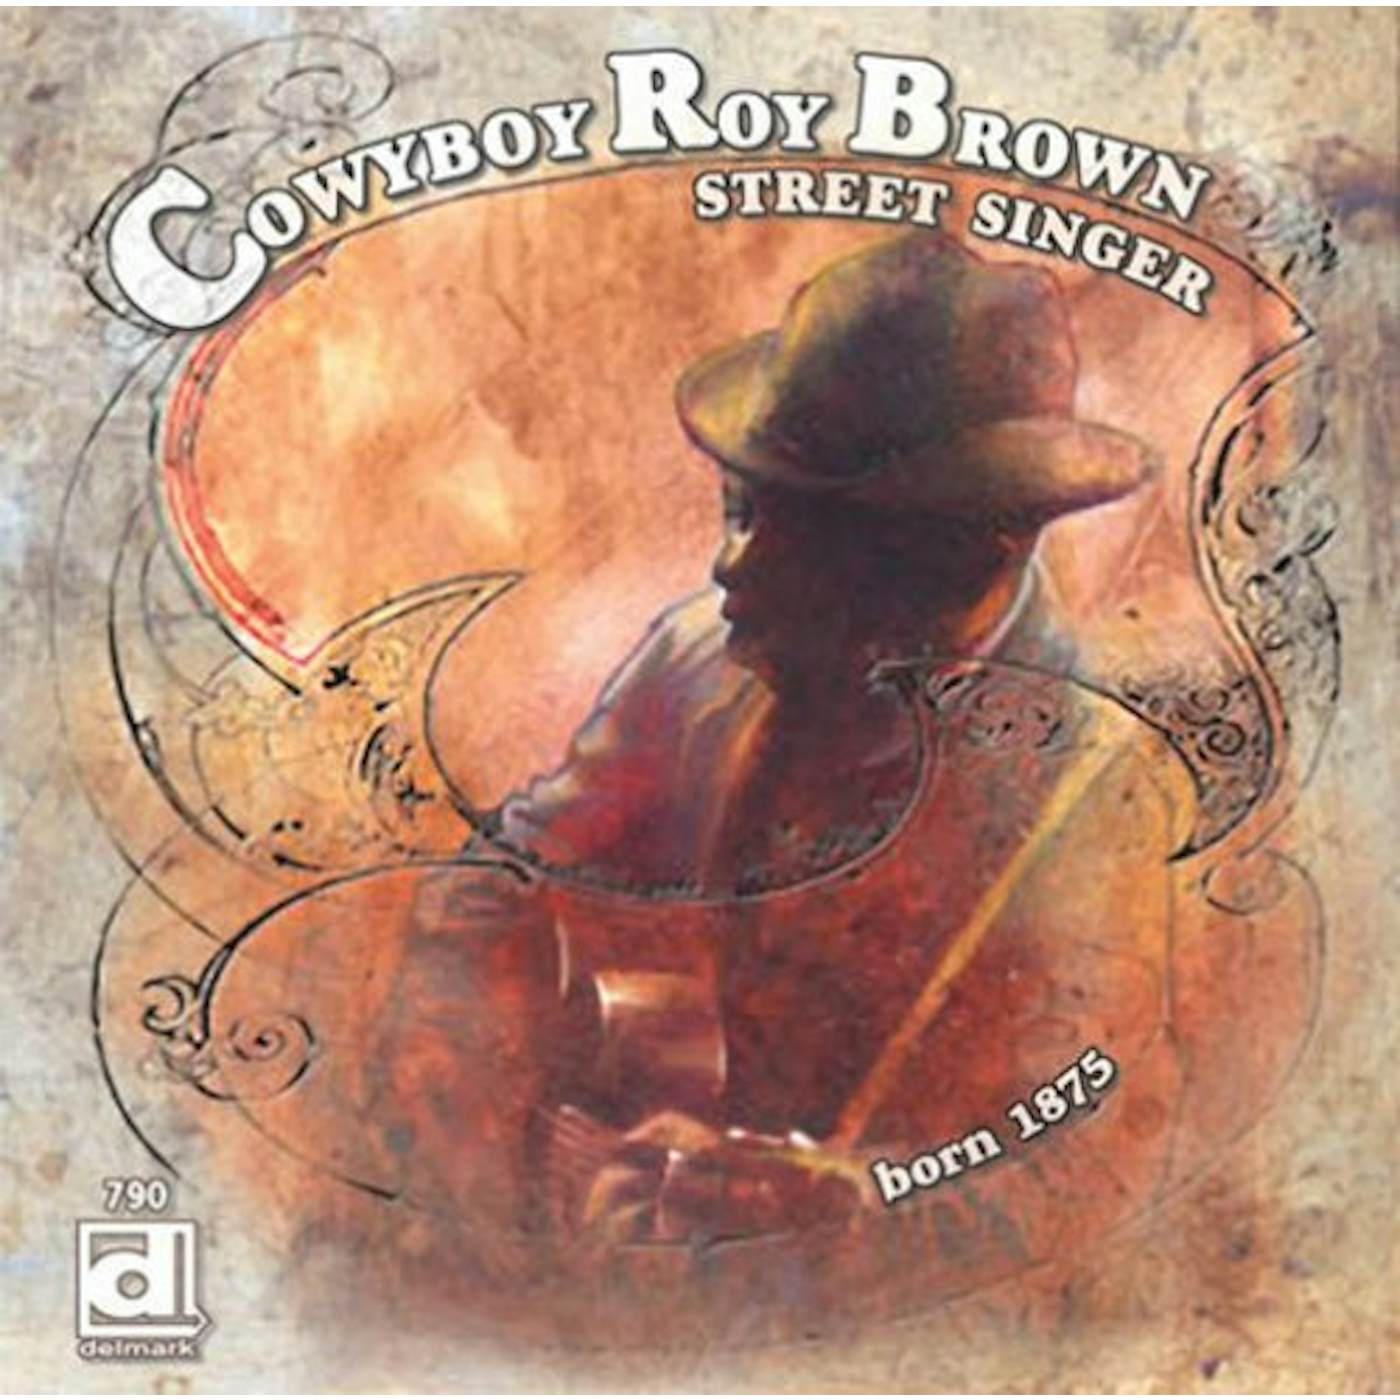 Roy Brown STREET SINGER CD